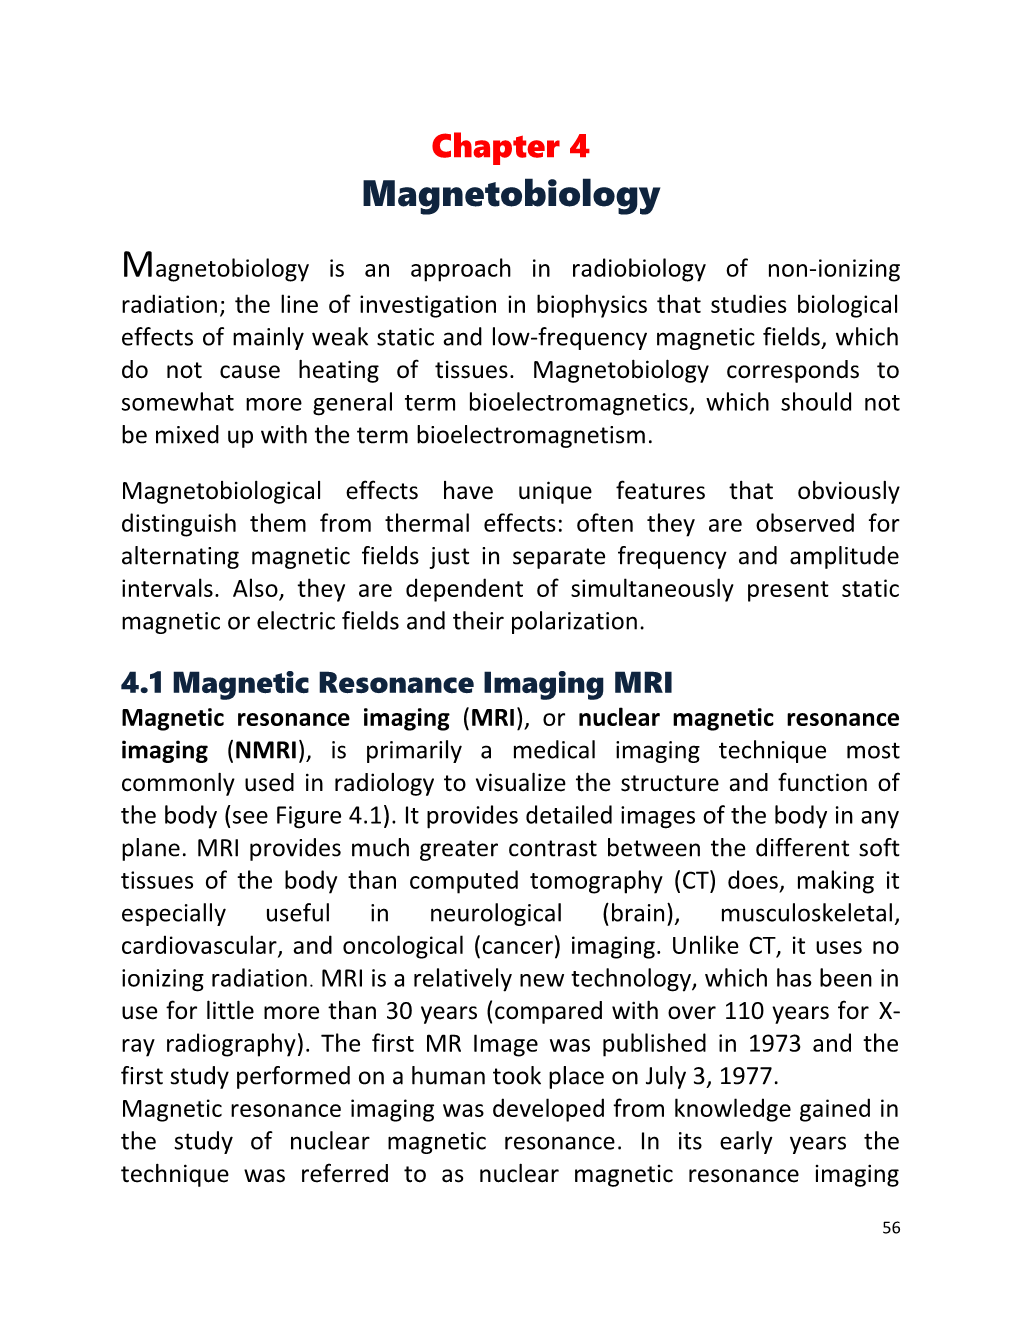 4.1 Magnetic Resonance Imaging MRI